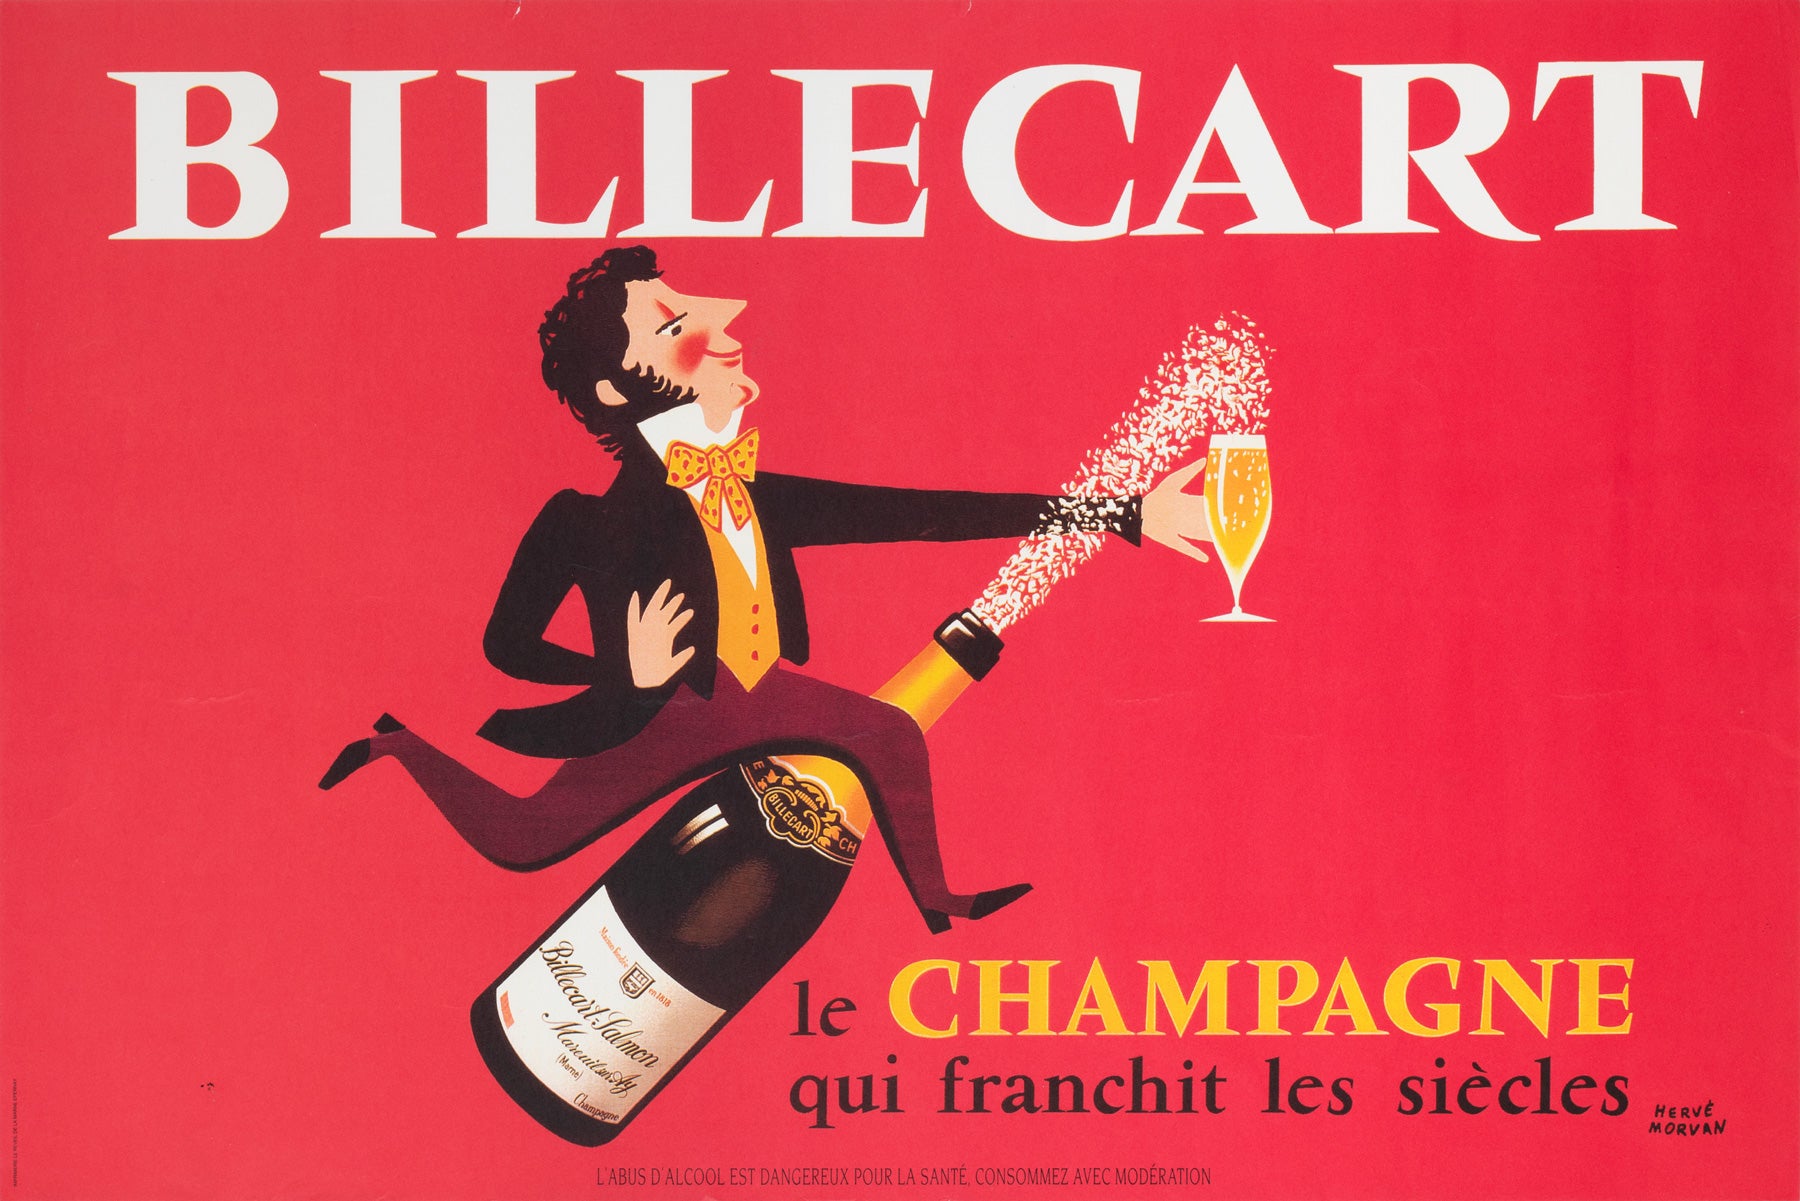 Billecart 1970 French Champagne Advertising Poster, Herve Morvan